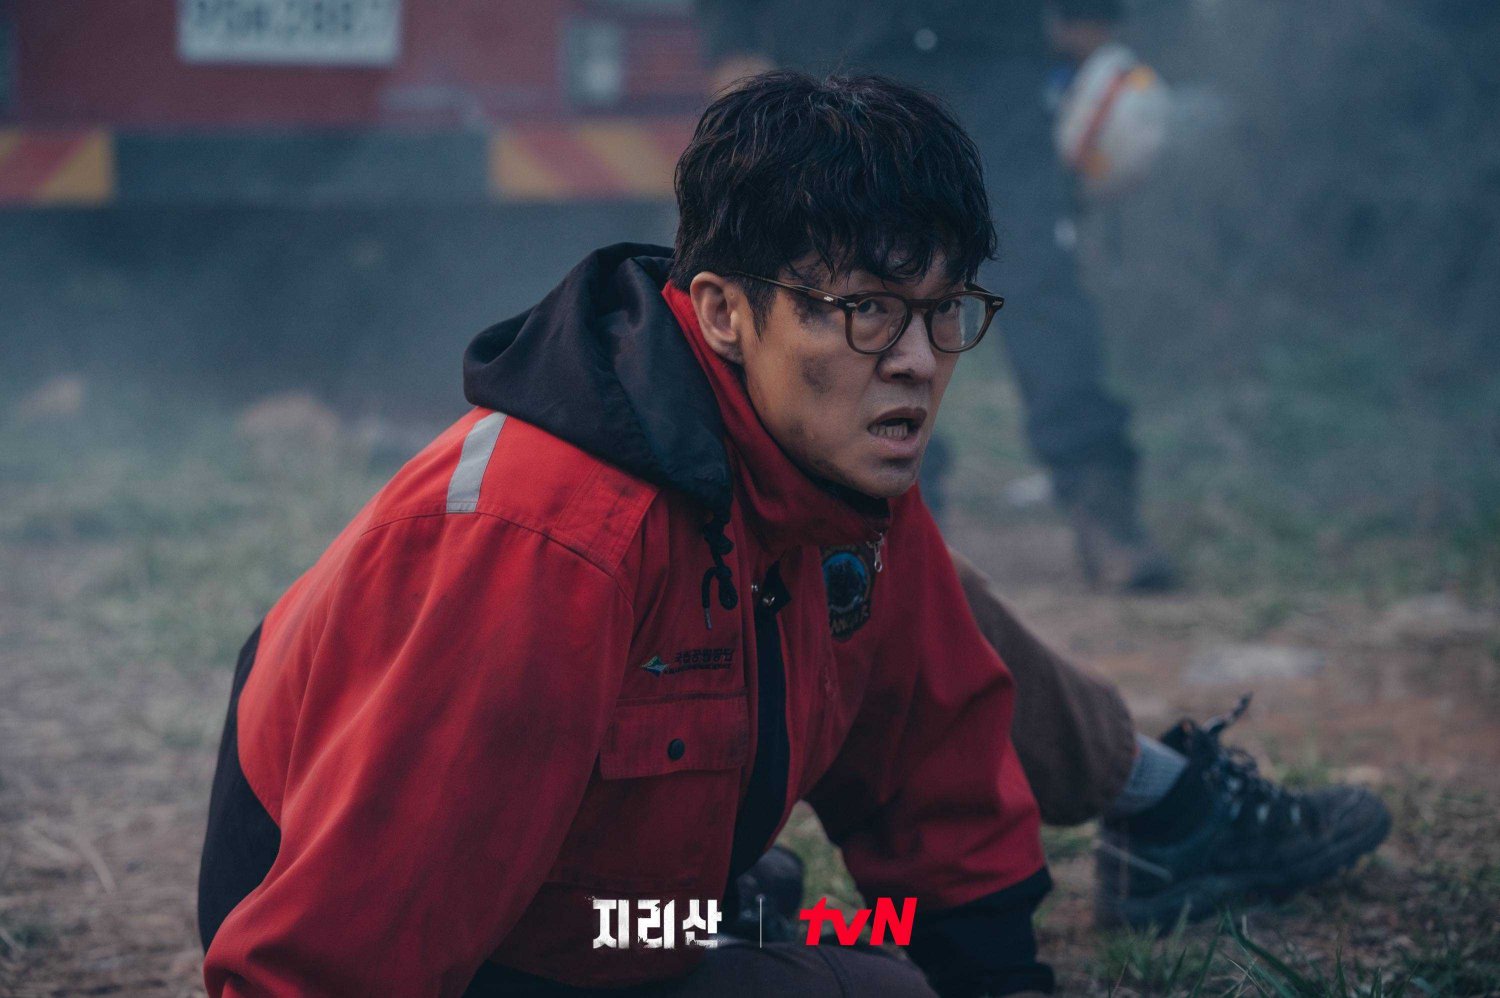 [Photos] New Stills Added for the Korean Drama 'Jirisan' @ HanCinema